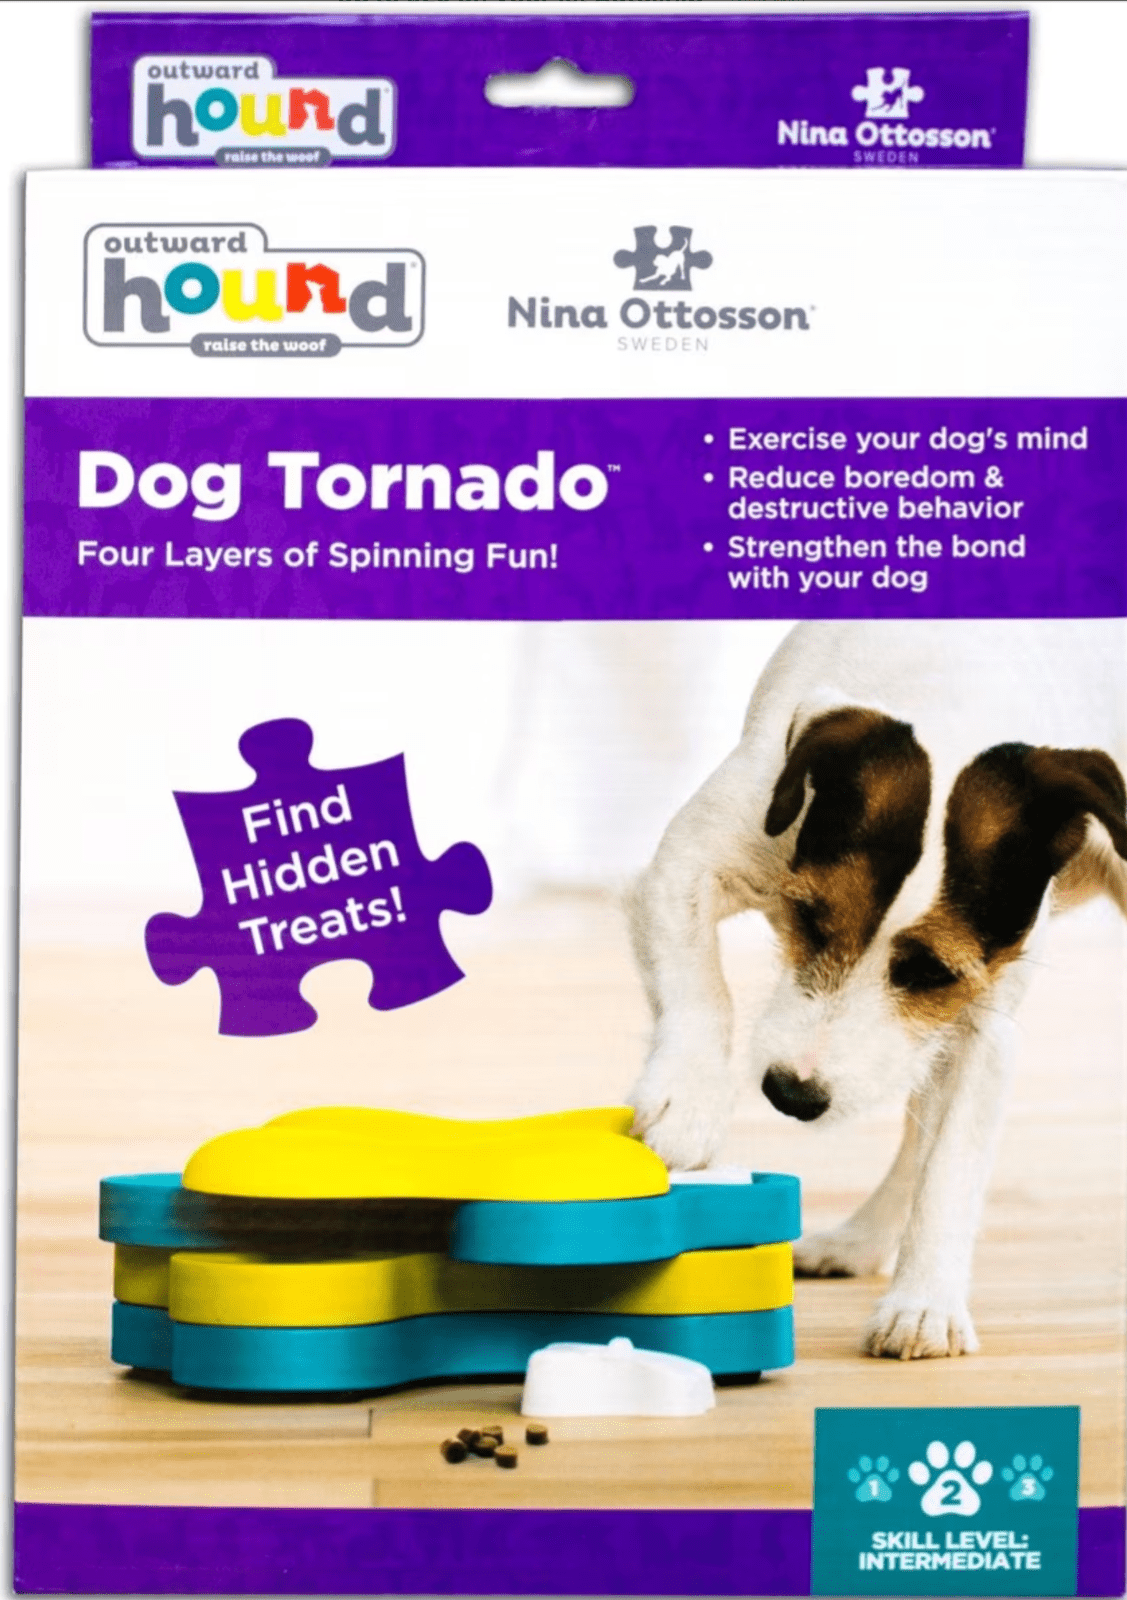 NIna Ottoson by Outward Hound — Puppy Tornado Strategy Game